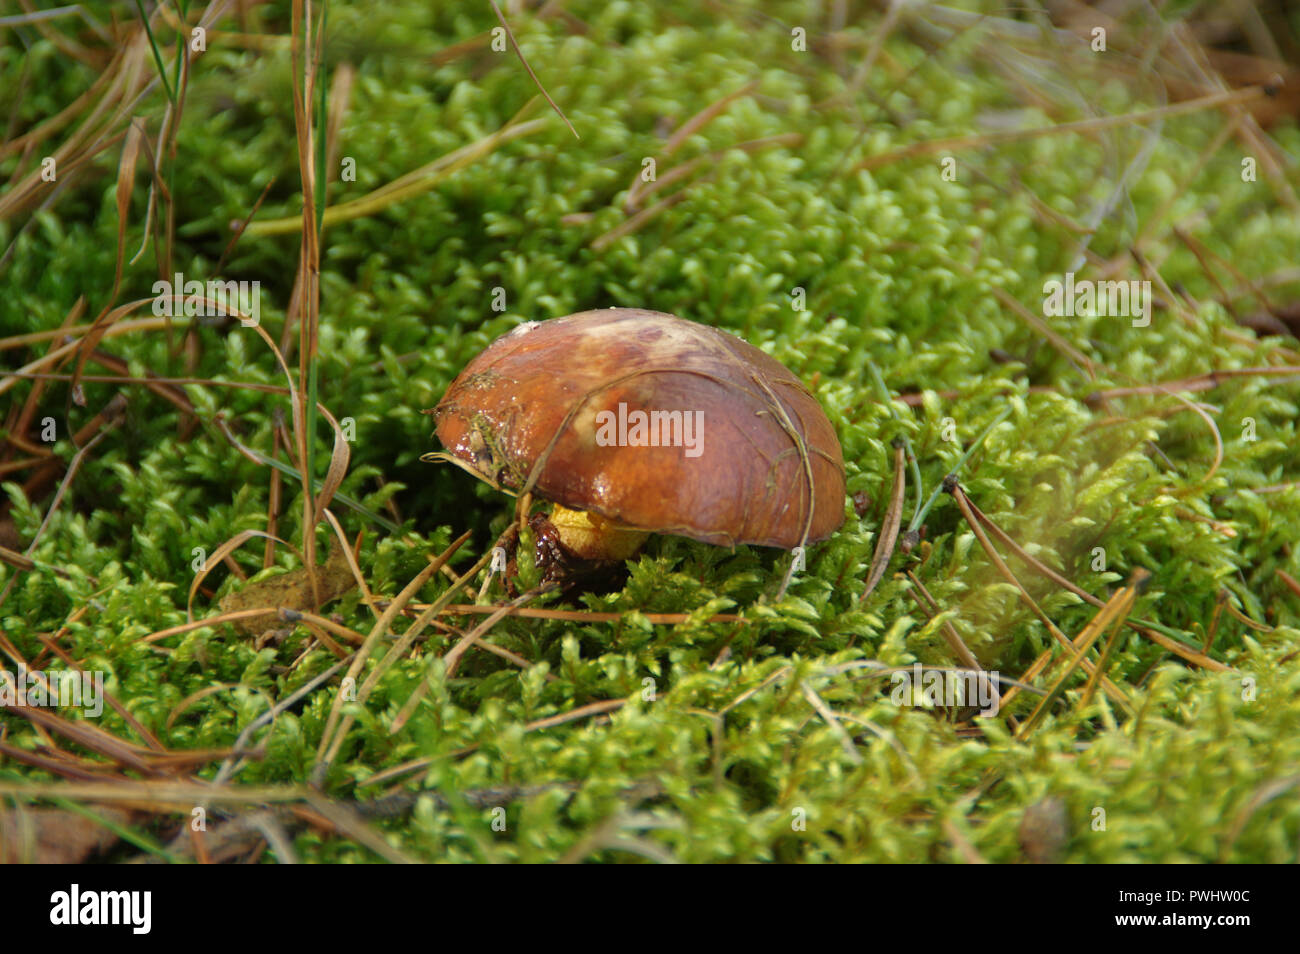 Slippery jack mushrooms (suillus) in natural environment. Edible fungus on green moss. Stock Photo